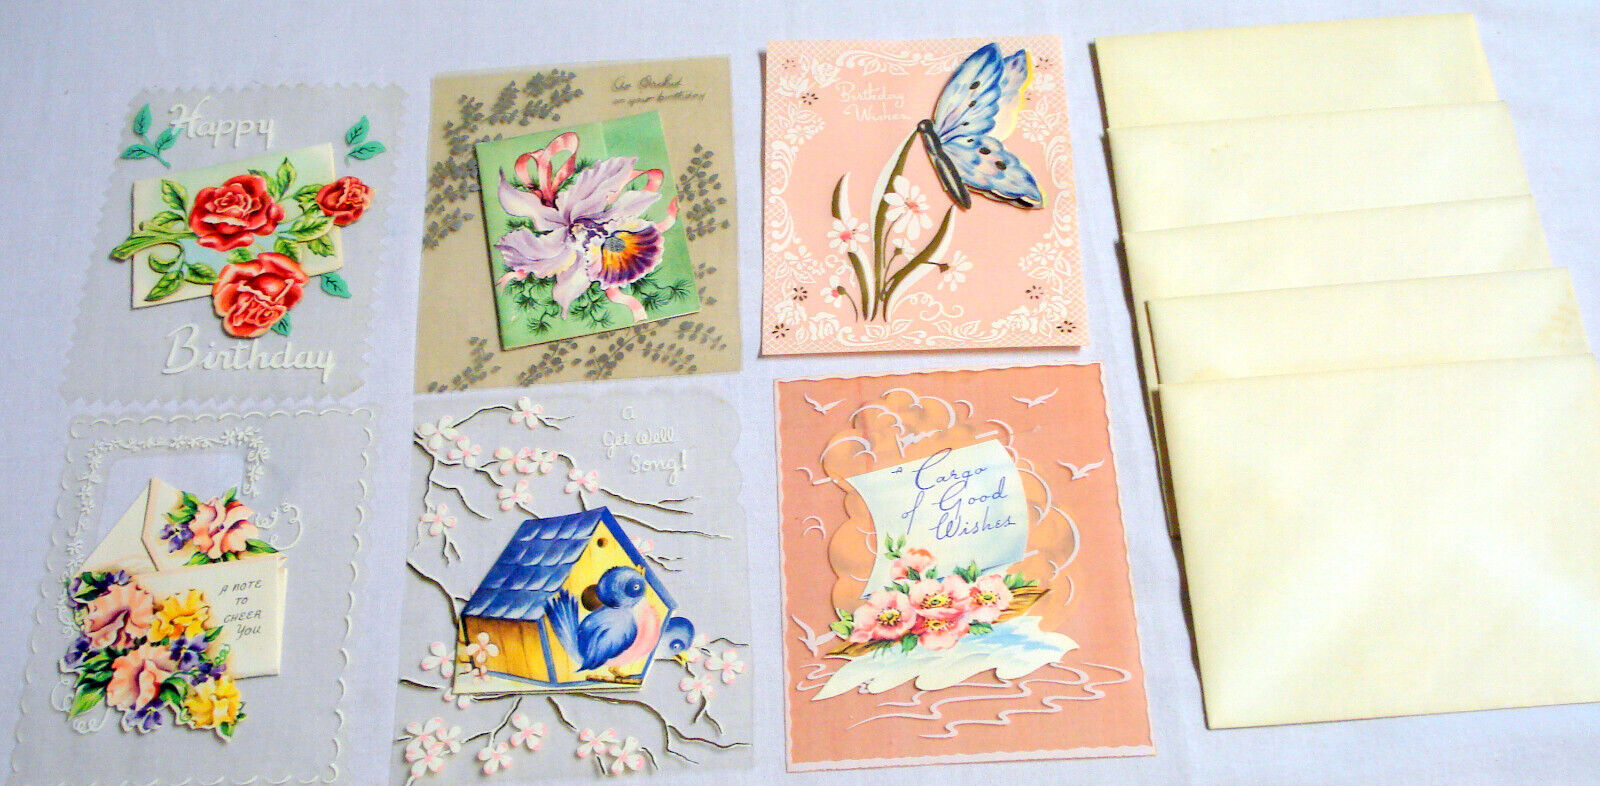 6 Unused Vintage 1950s Regal Plastic Greeting Cards 3 Birthday, 3 Get Well